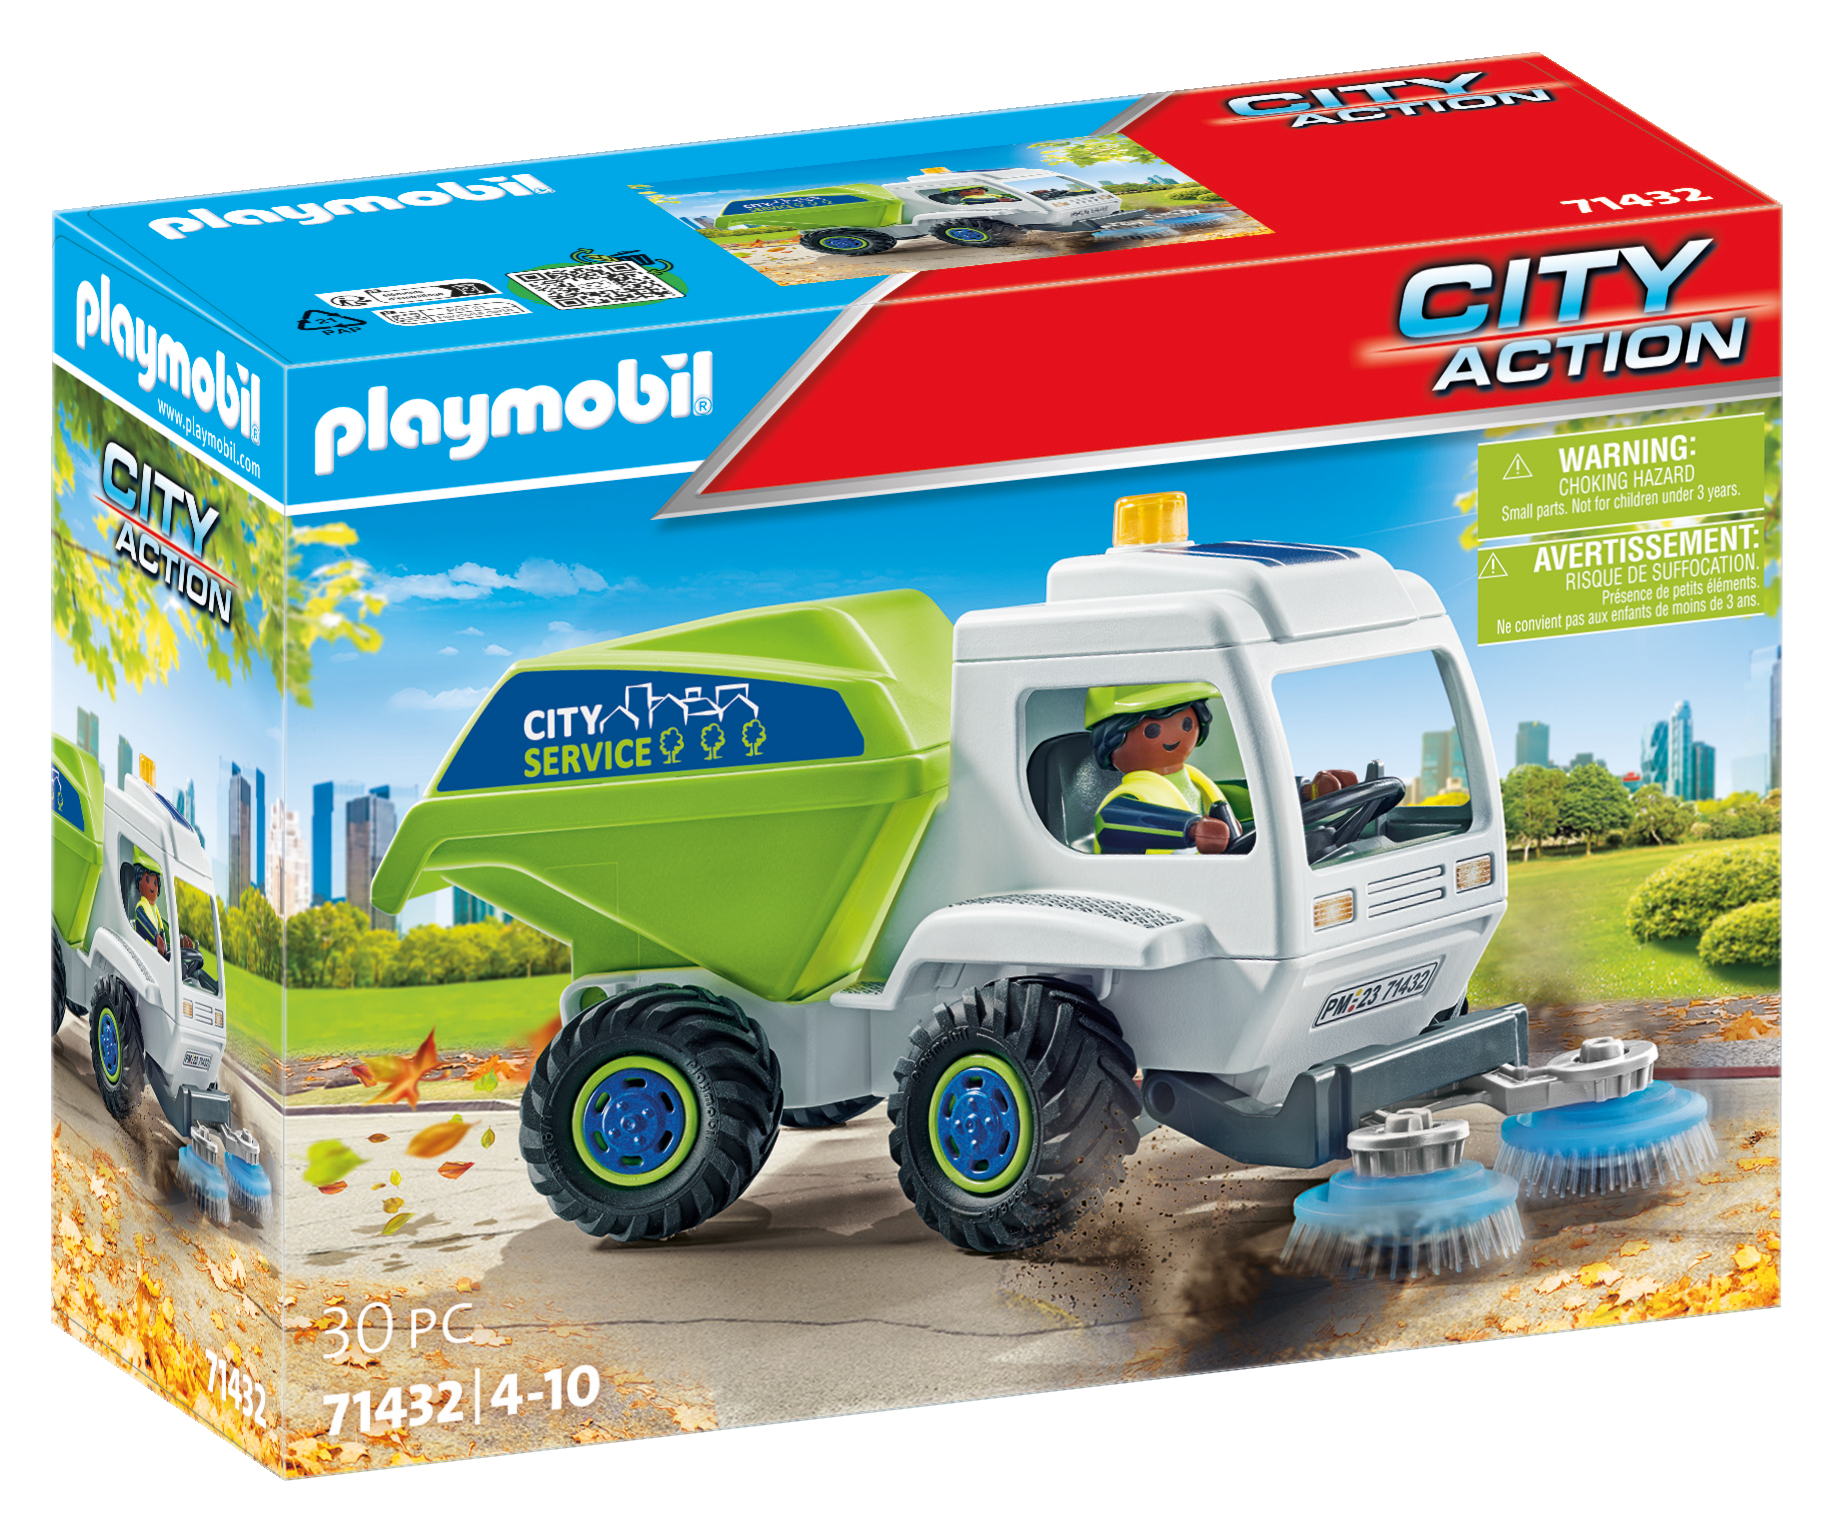 Playmobil 71432 spazzatrice per bambini dai 4 anni - Playmobil